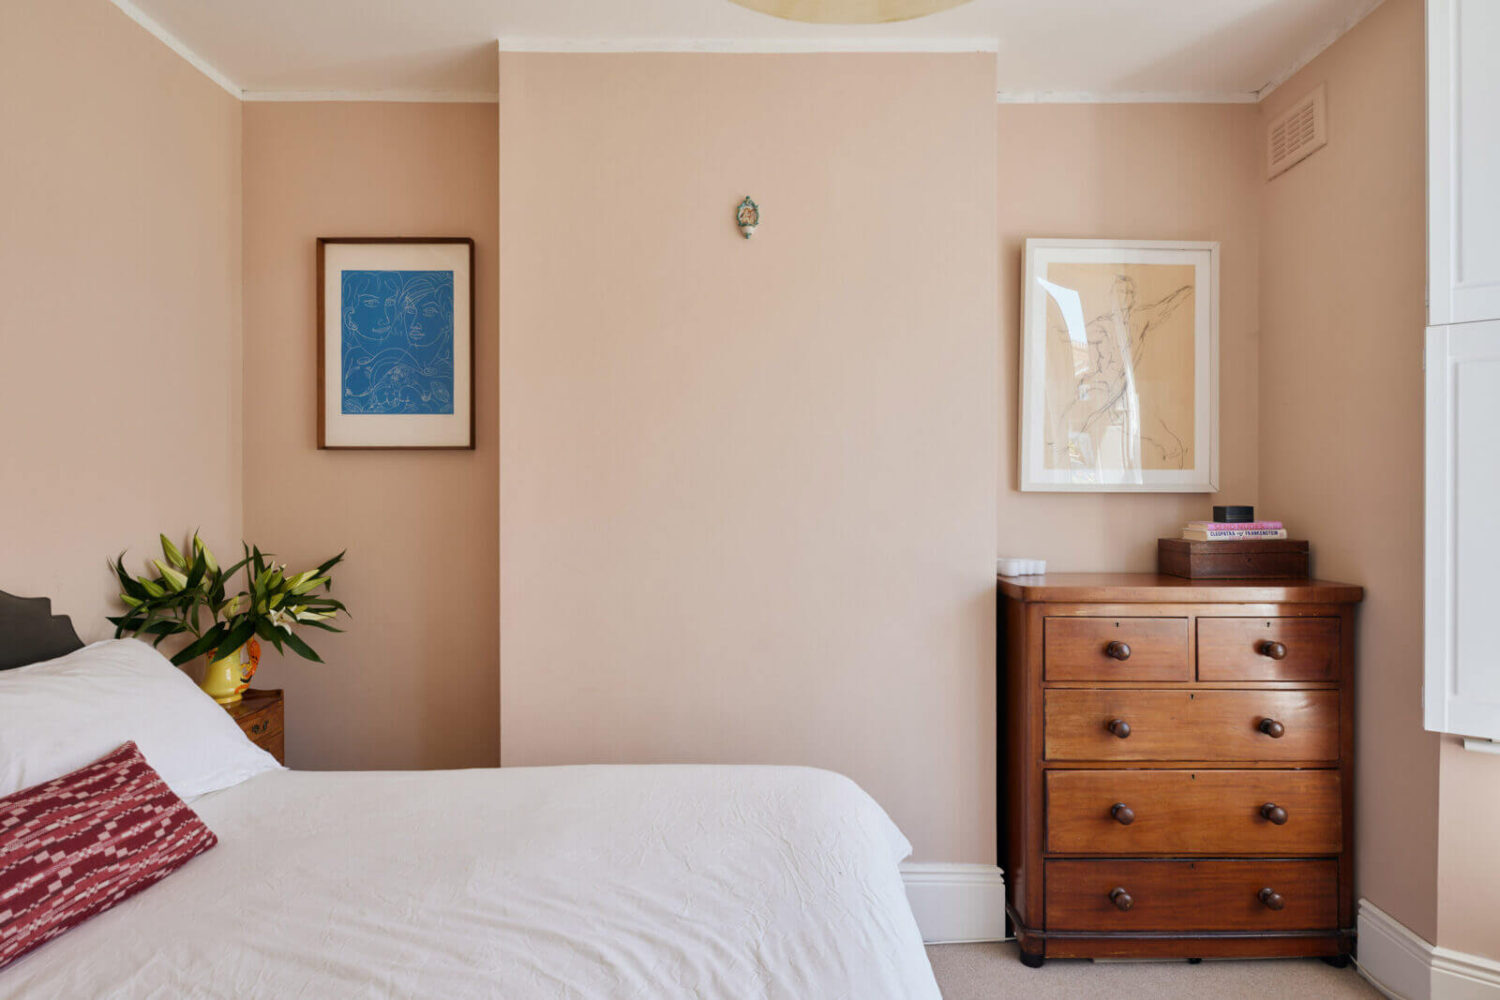 farrow-ball-setting-plaster-pink-walls-bedroom-nordroom